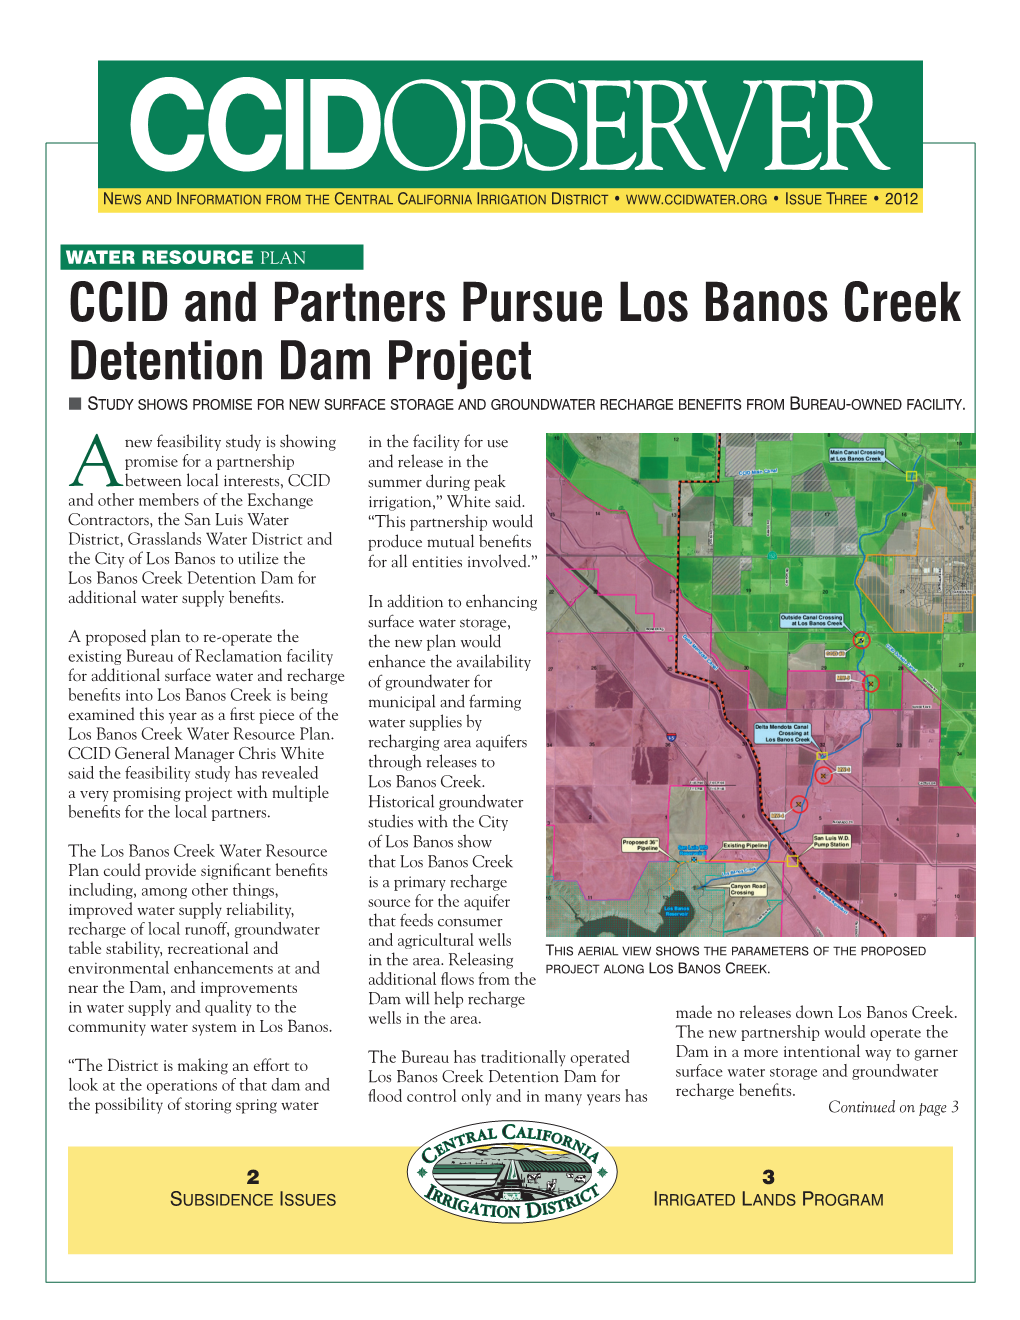 CCID and Partners Pursue Los Banos Creek Detention Dam Project